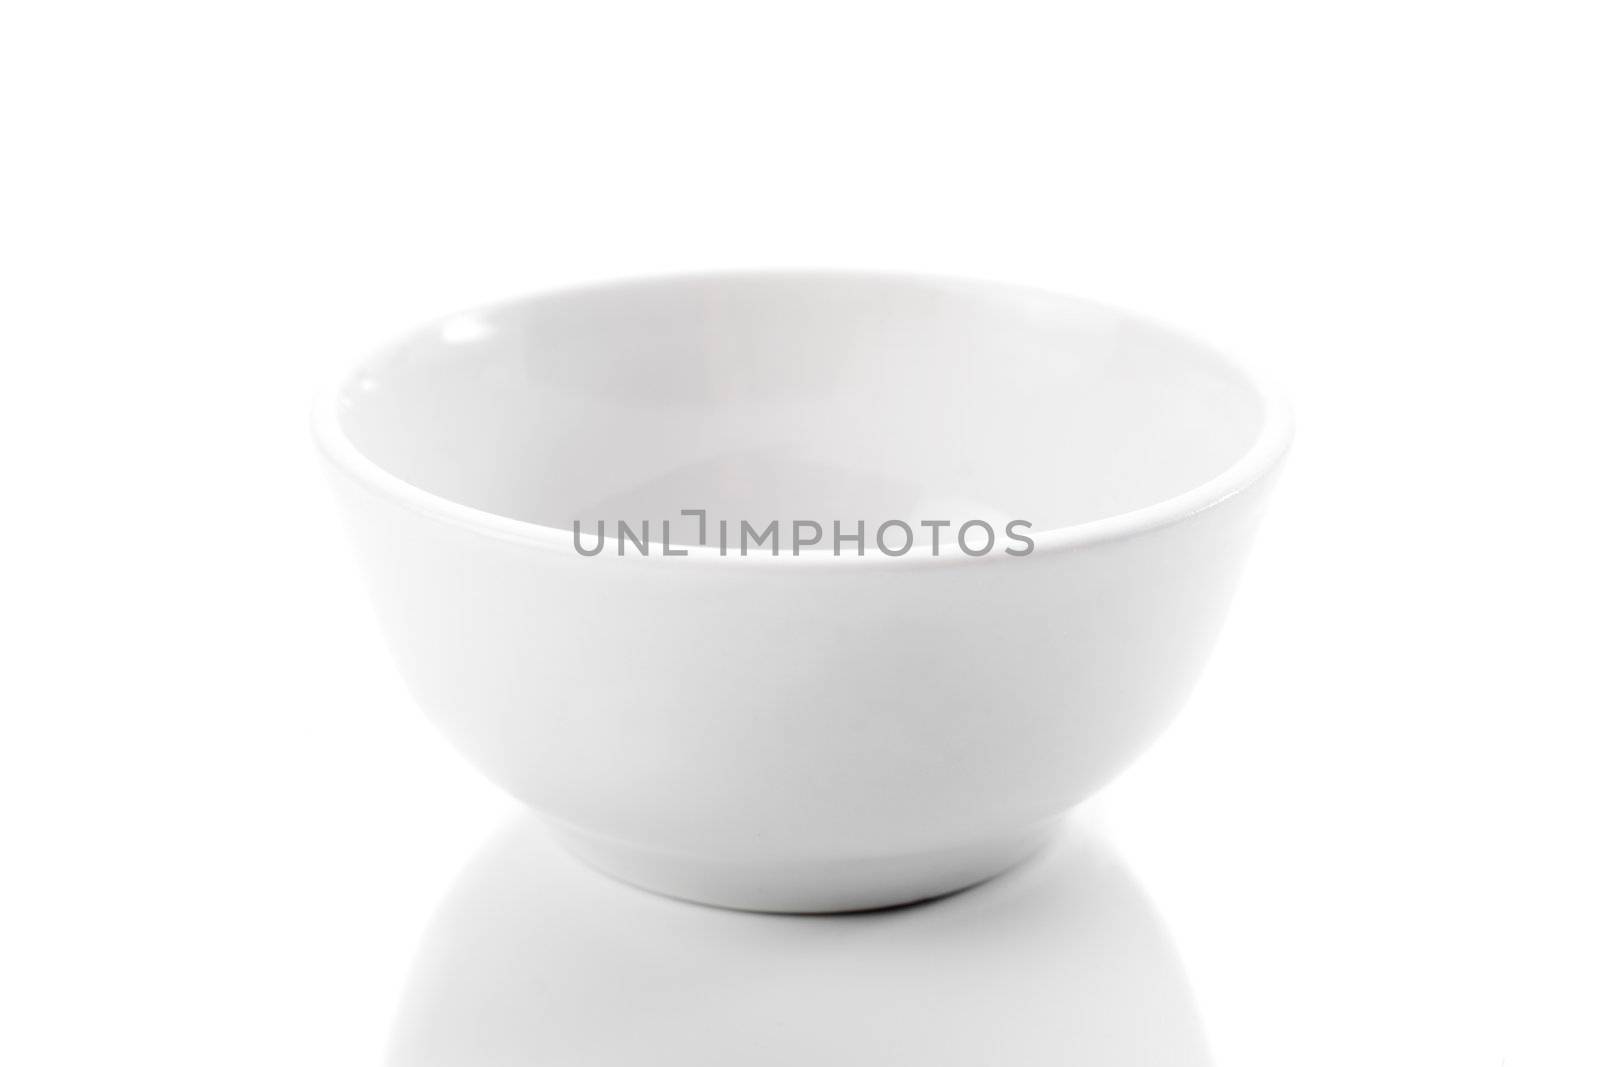 brand new white dish on bright background